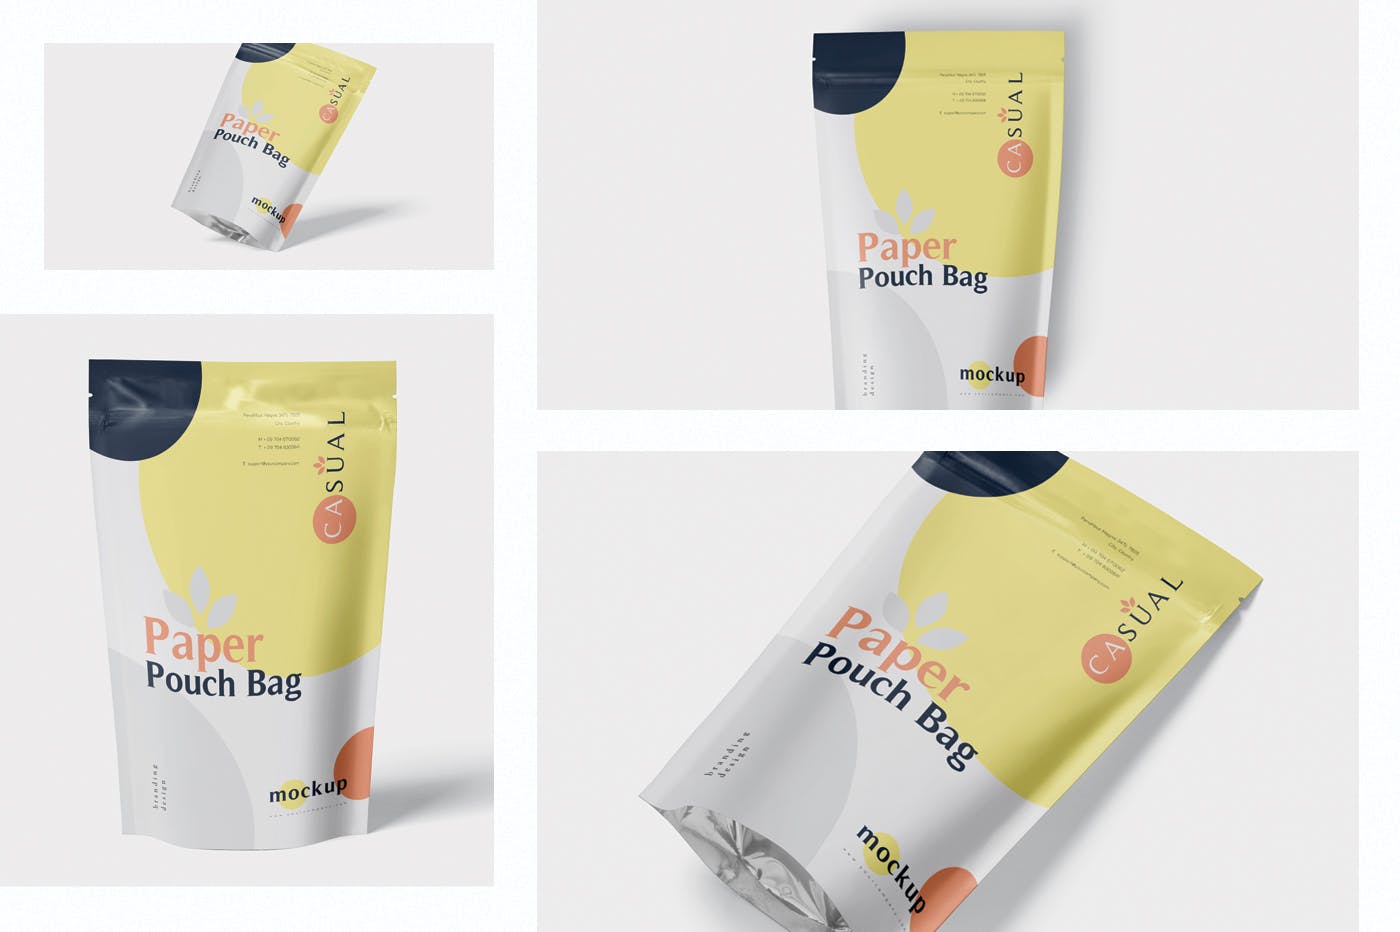 食品自封袋包装设计效果图素材库精选 Paper Pouch Bag Mockup – Large Size插图(1)